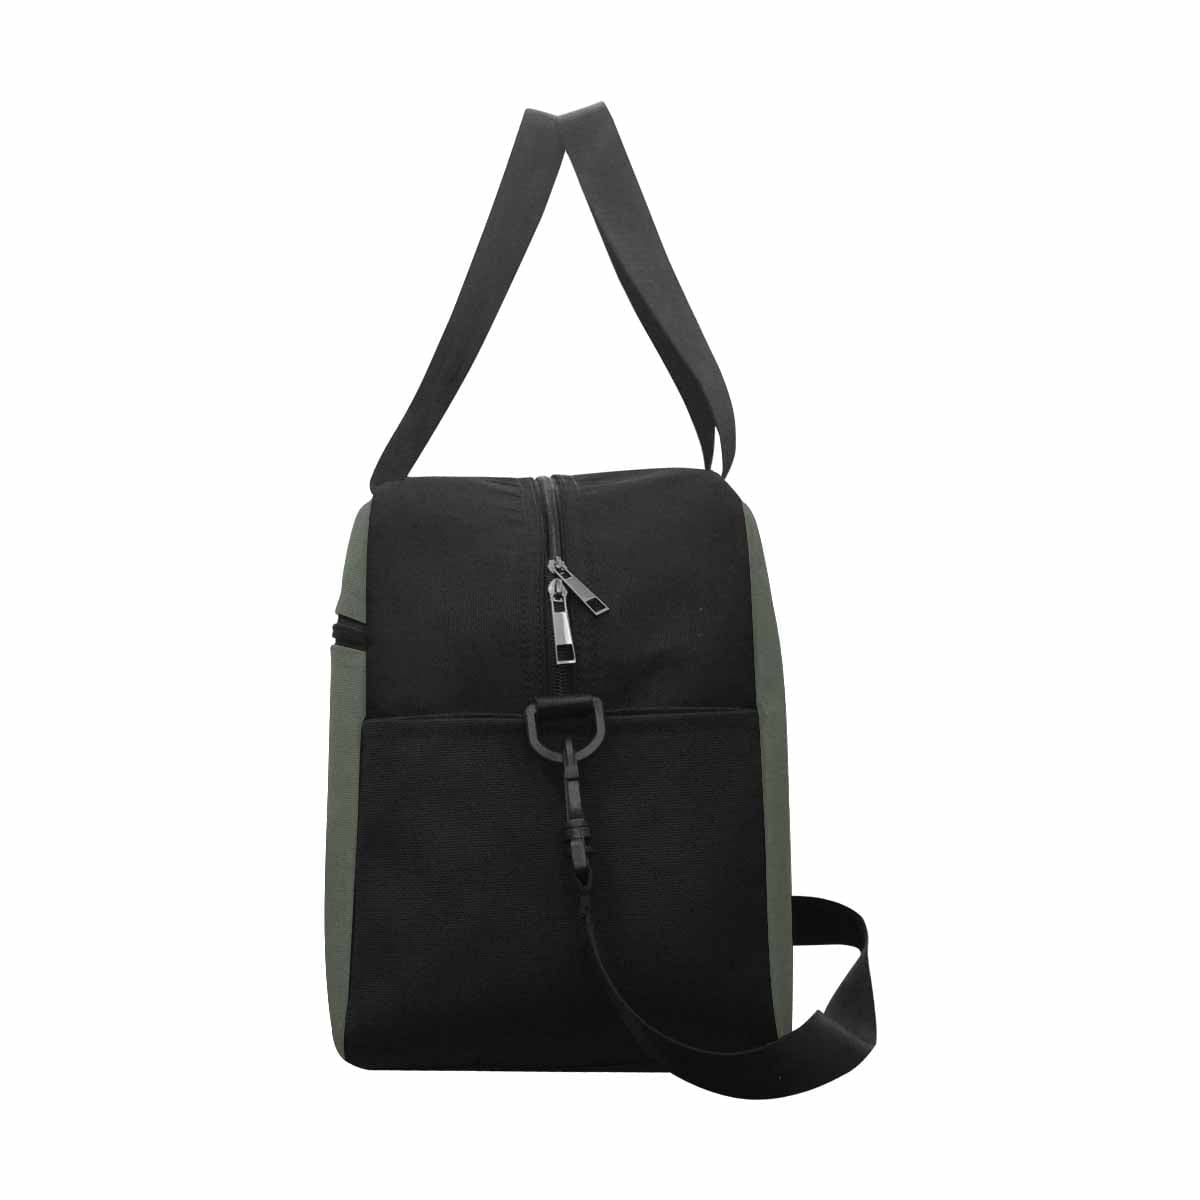 Ebony Black Tote And Crossbody Travel Bag - Bags | Travel Bags | Crossbody